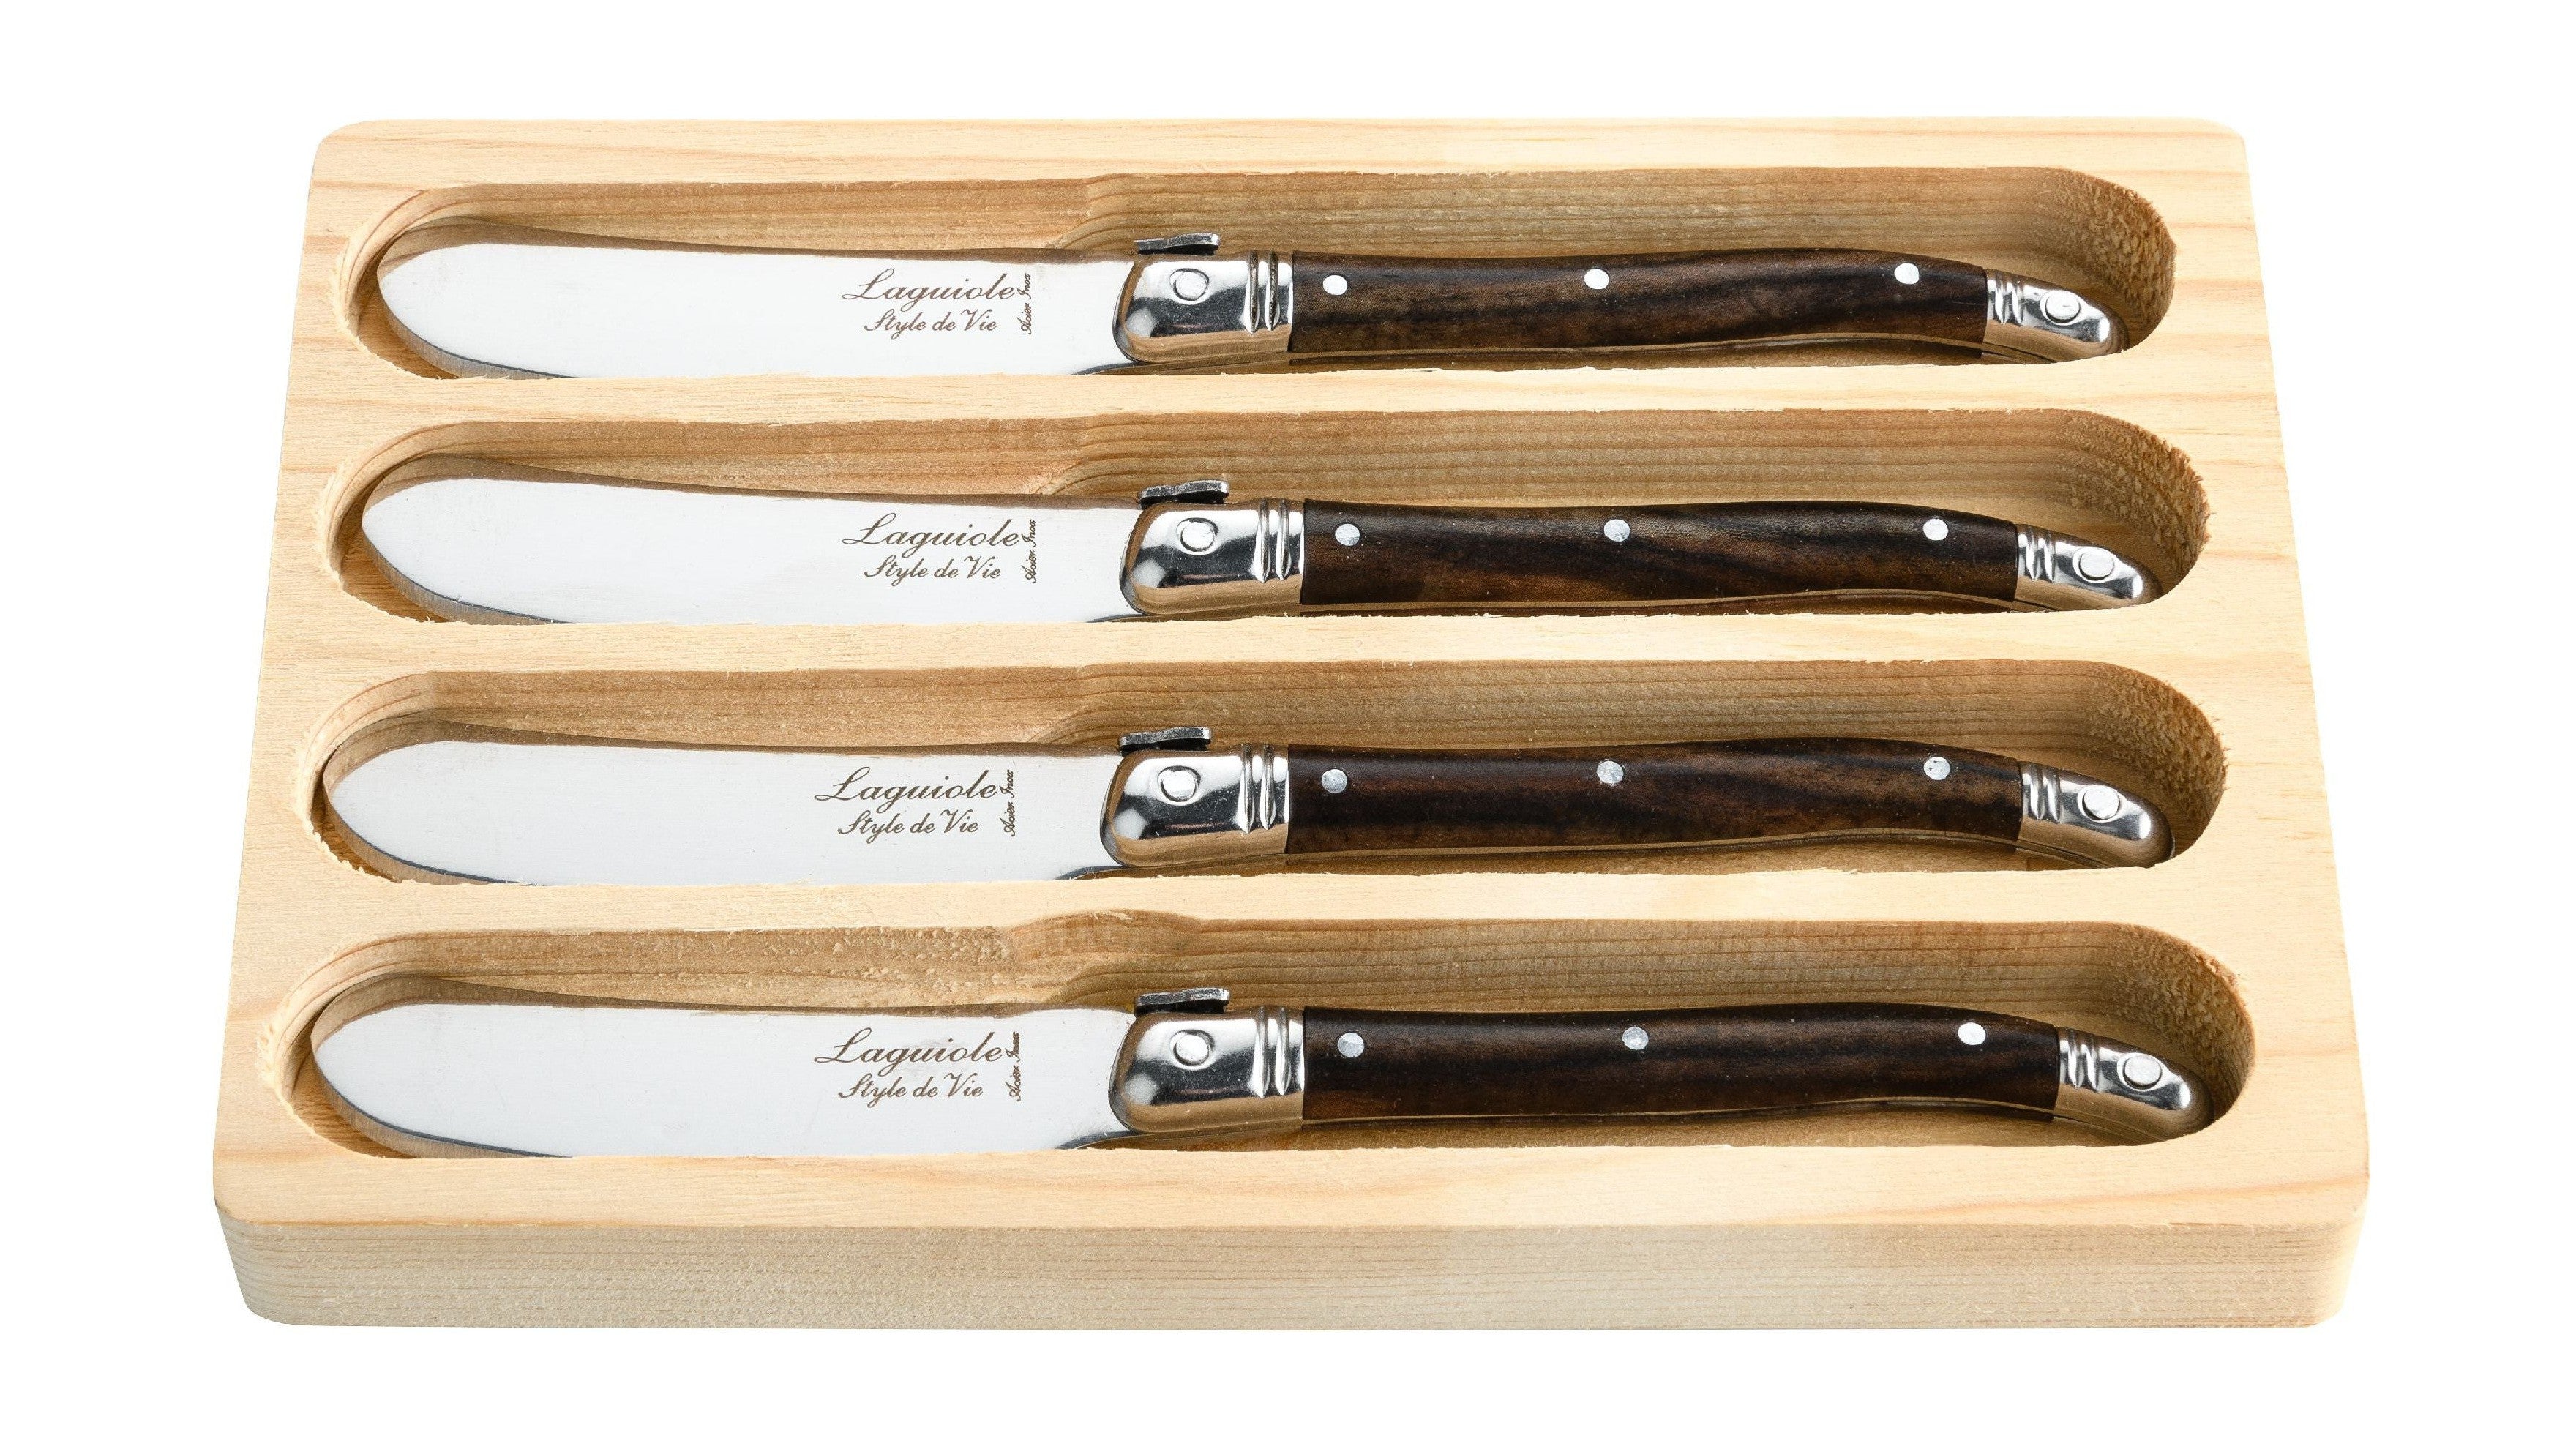 Style de Vie authentique laguiole premium linje smör knivar 4 stycken set, mörk trä